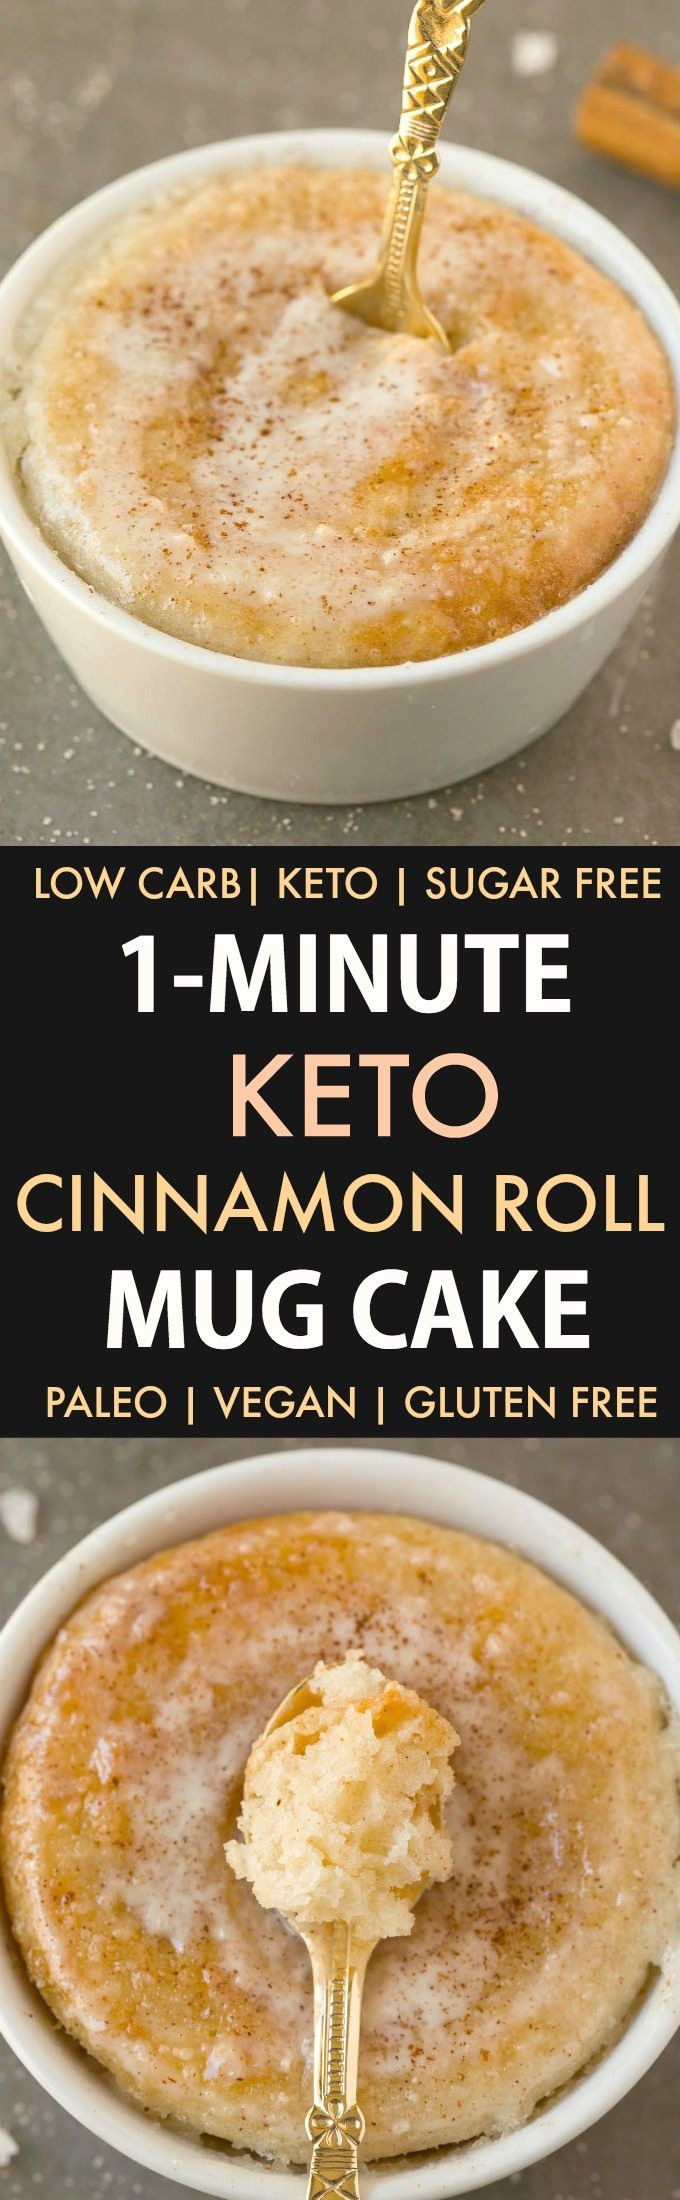 Keto Cinnamon Roll Mug Cake
 Healthy 1 Minute Low Carb Keto Mug Cakes Paleo Vegan